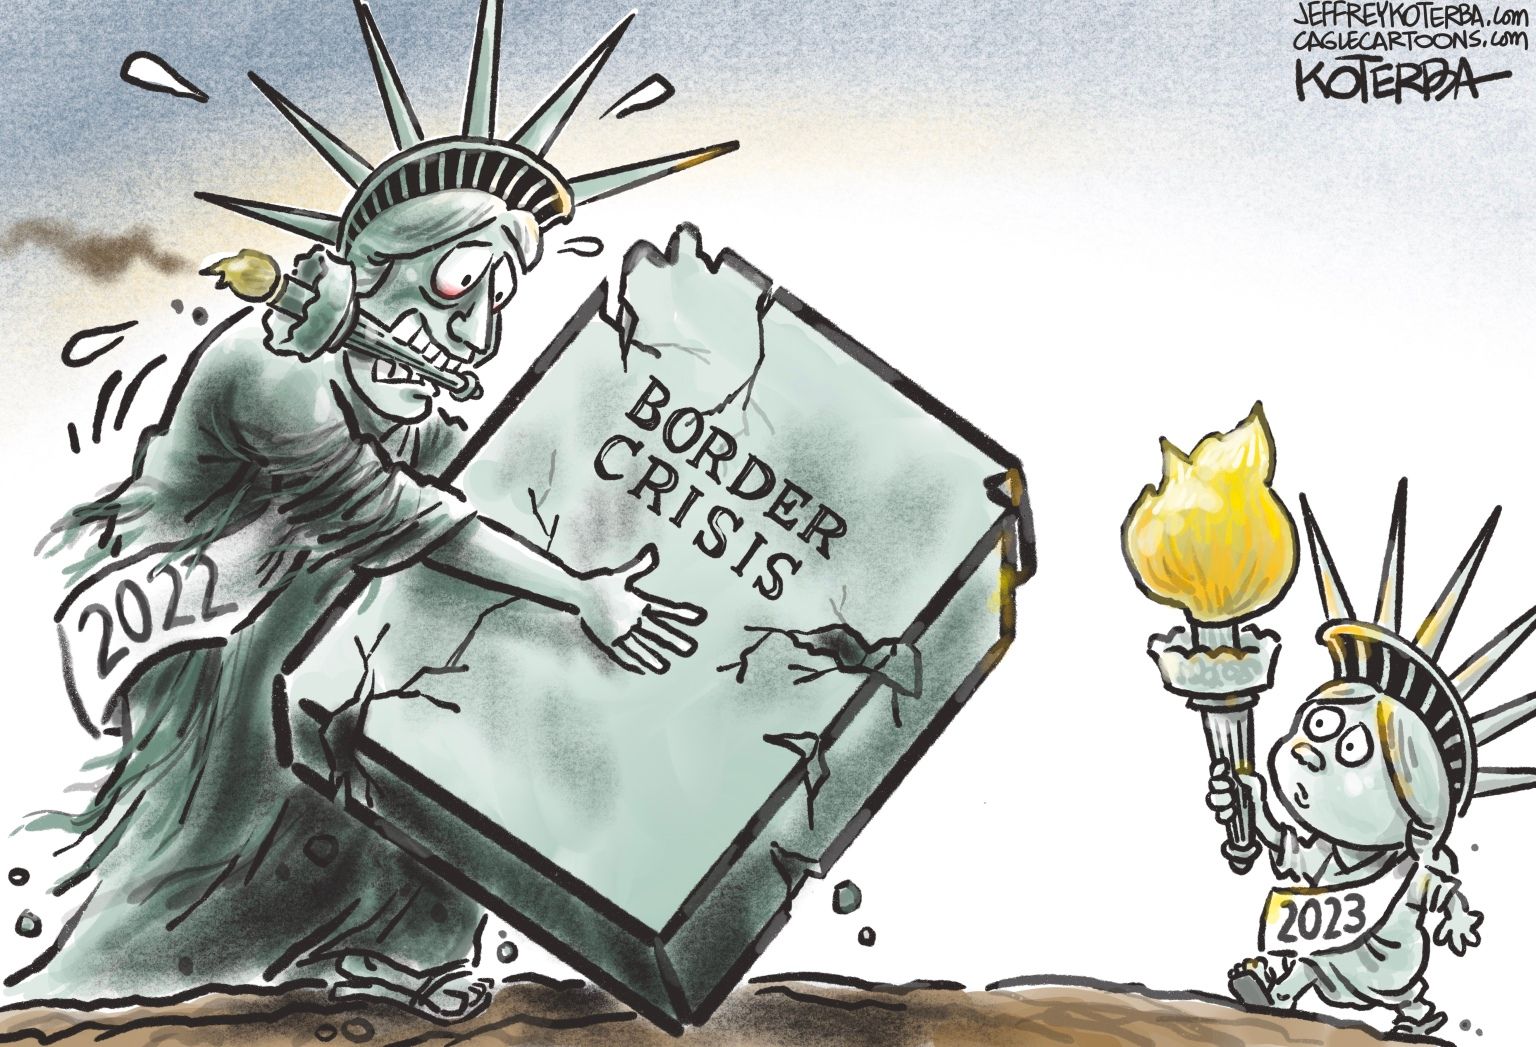 Border Crisis in the New Year - newsjustin.press - editorial political cartoon